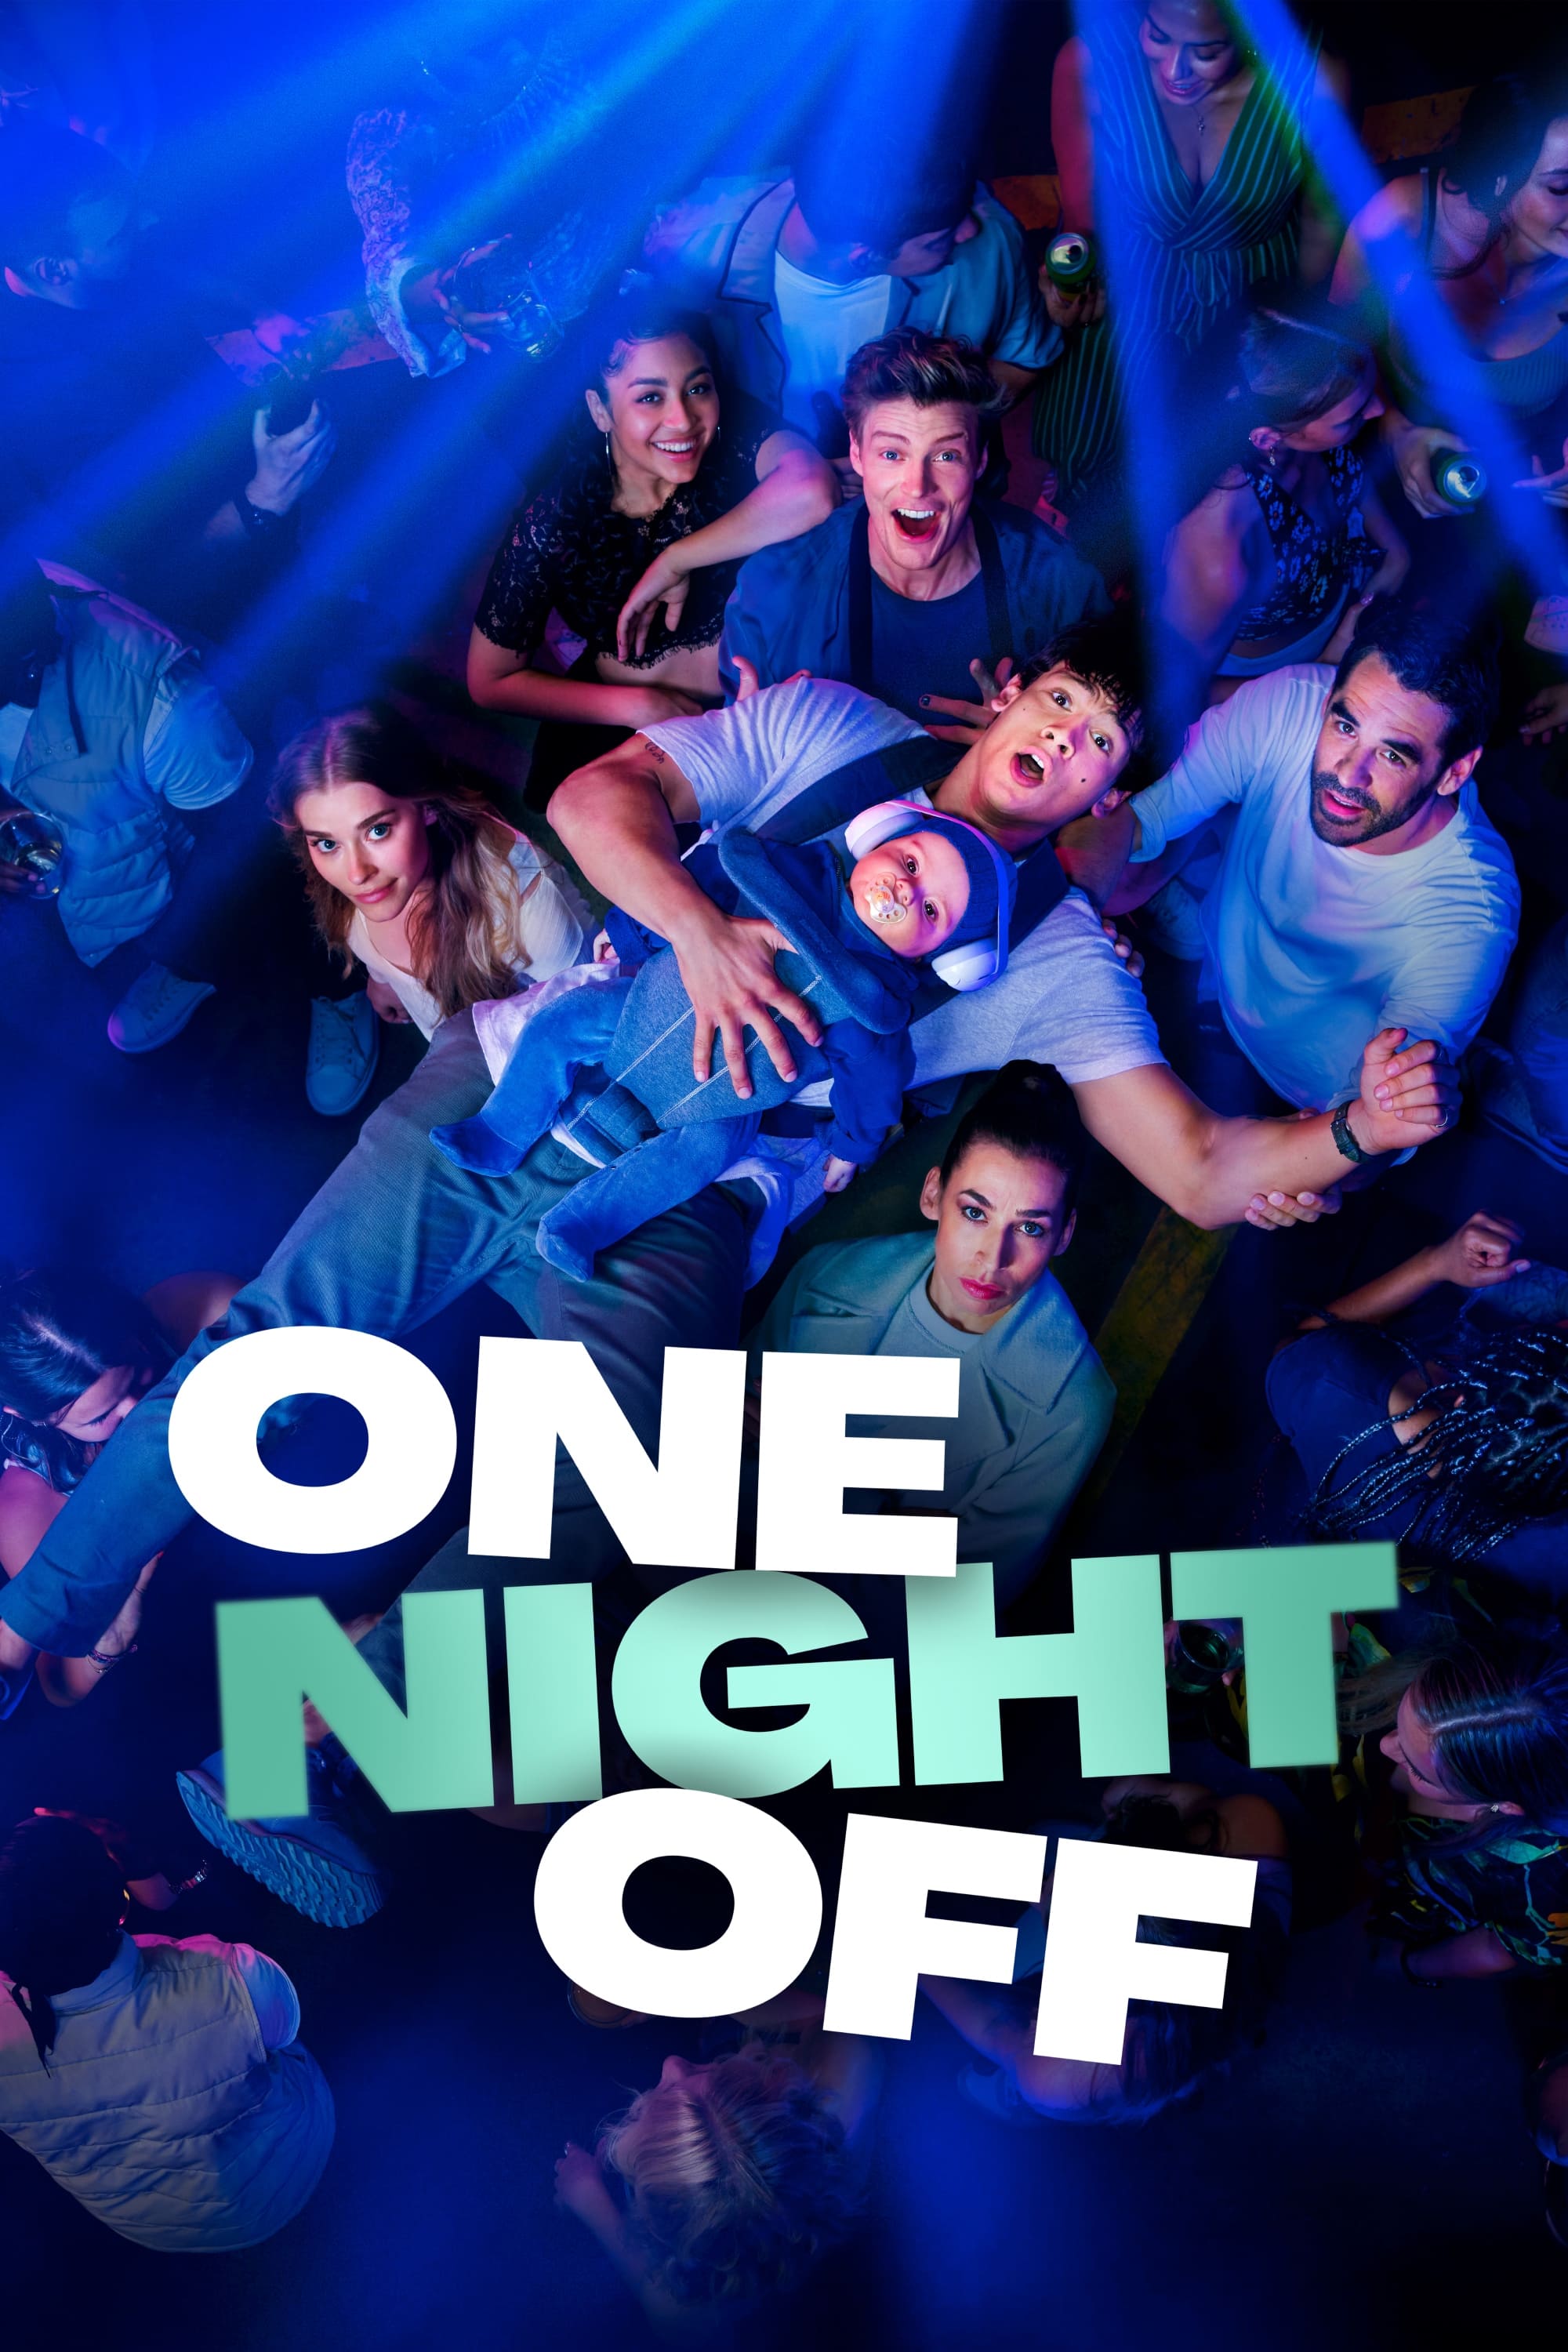 One Night Off (2021)